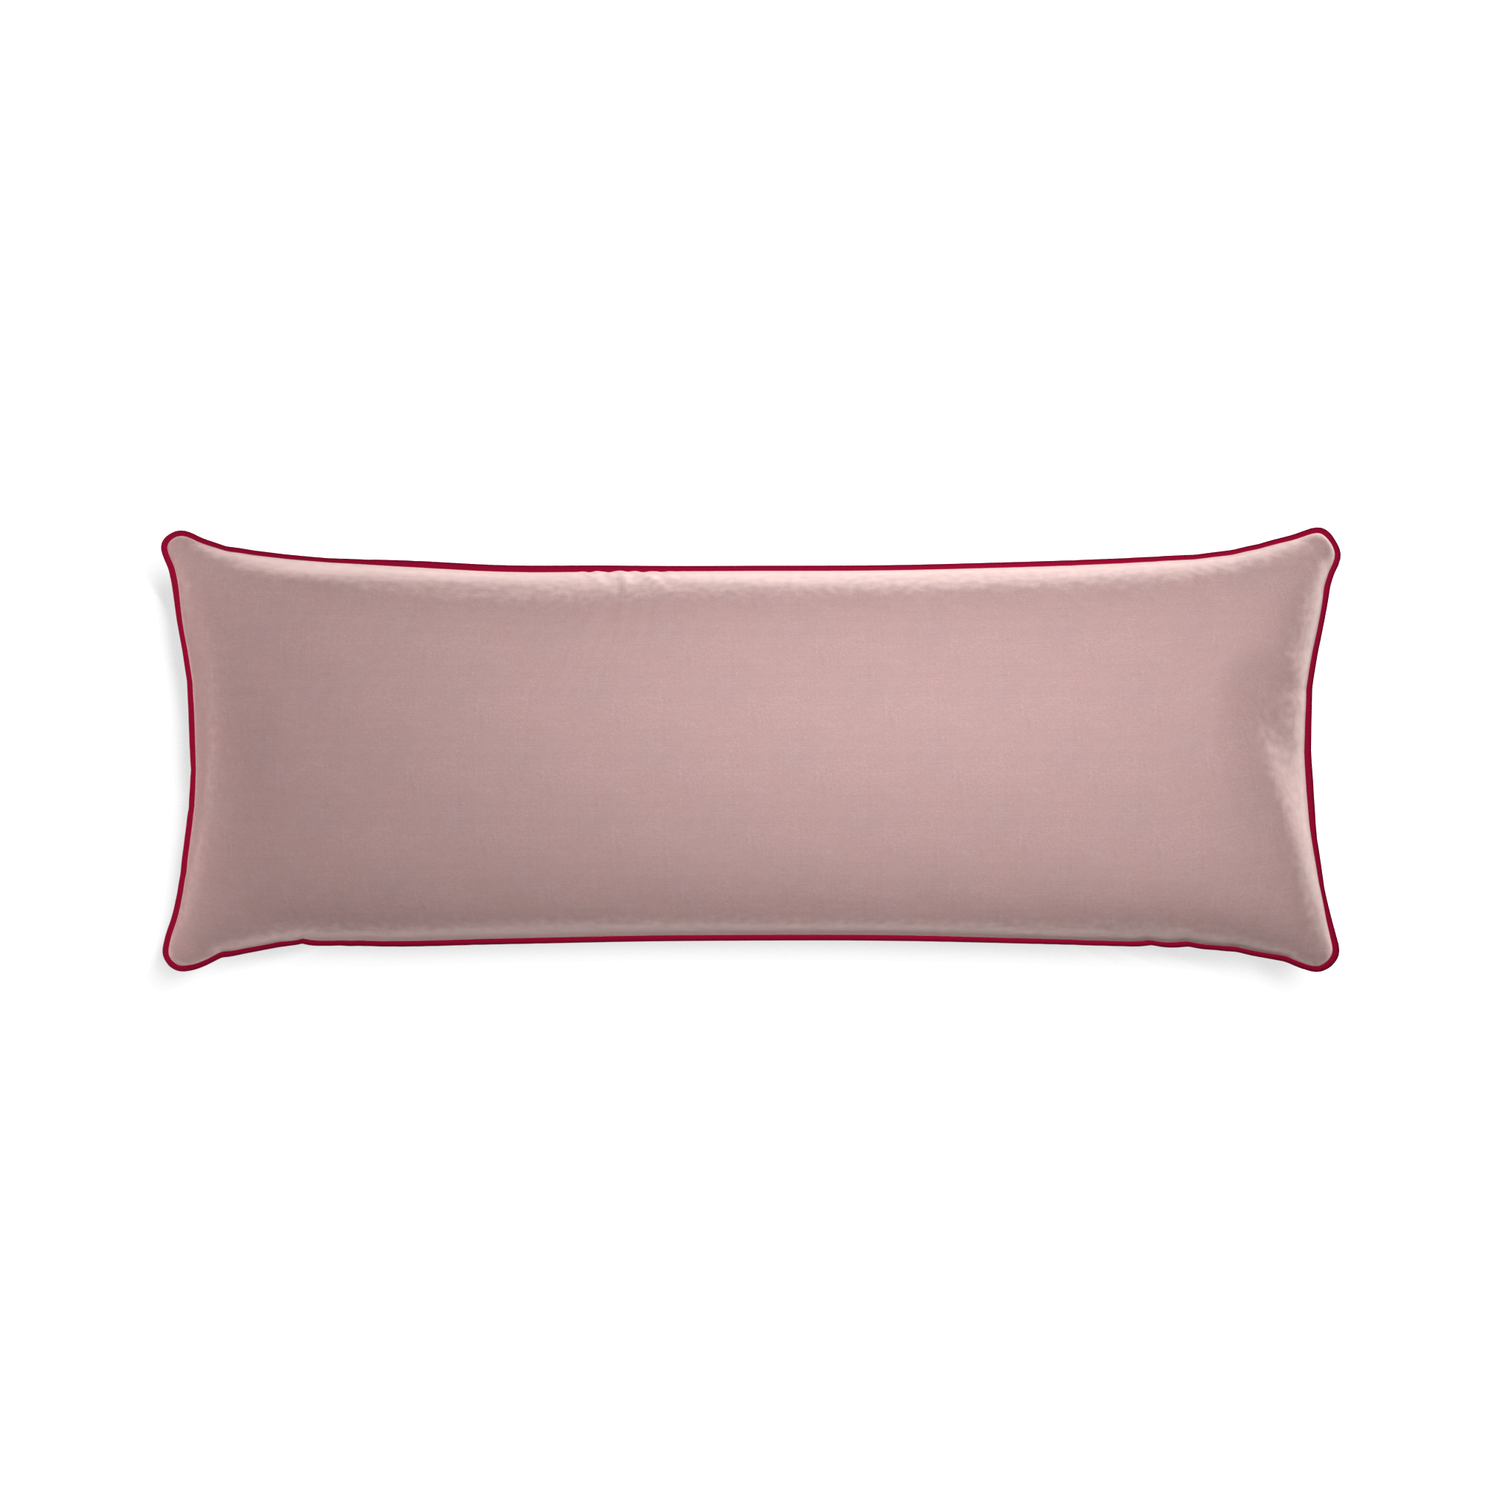 Xl-lumbar mauve velvet custom pillow with raspberry piping on white background